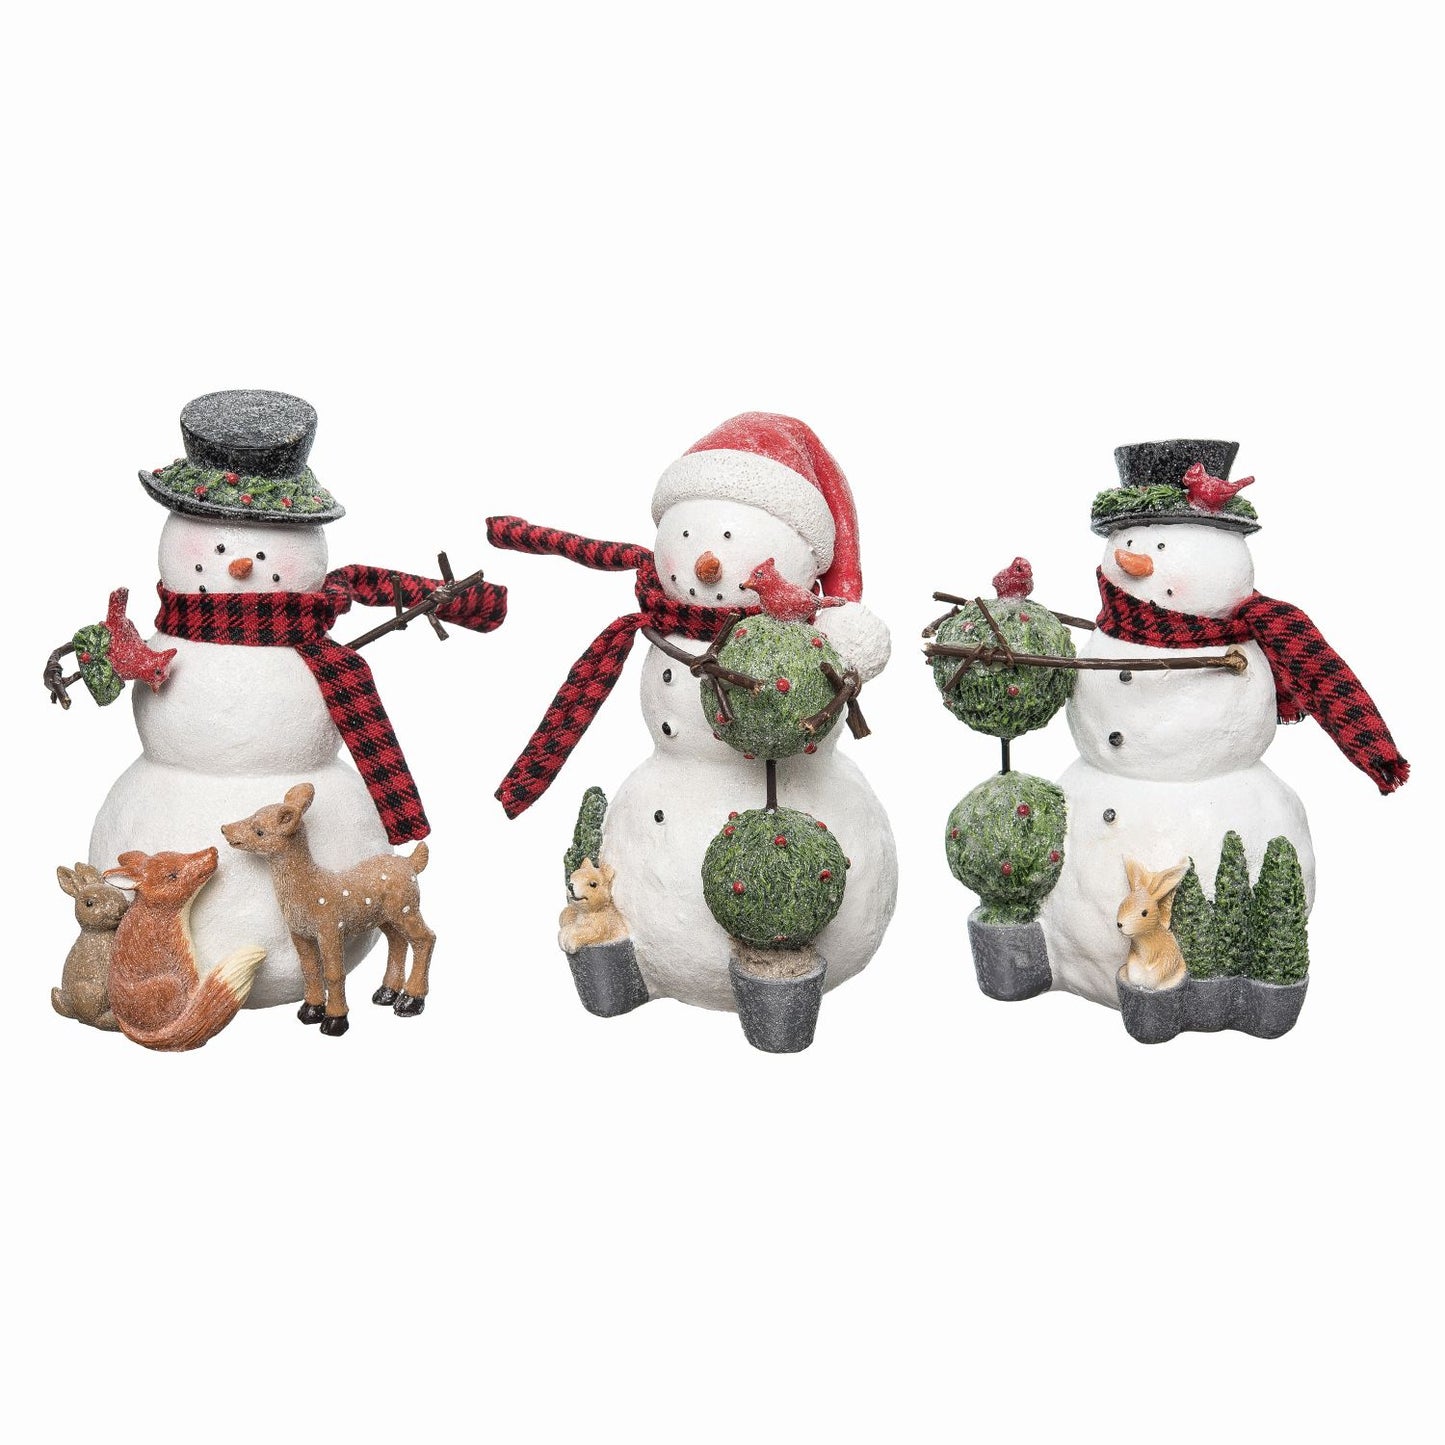 Transpac Resin Busy Snowman Figurine, Set Of 3, Assortment